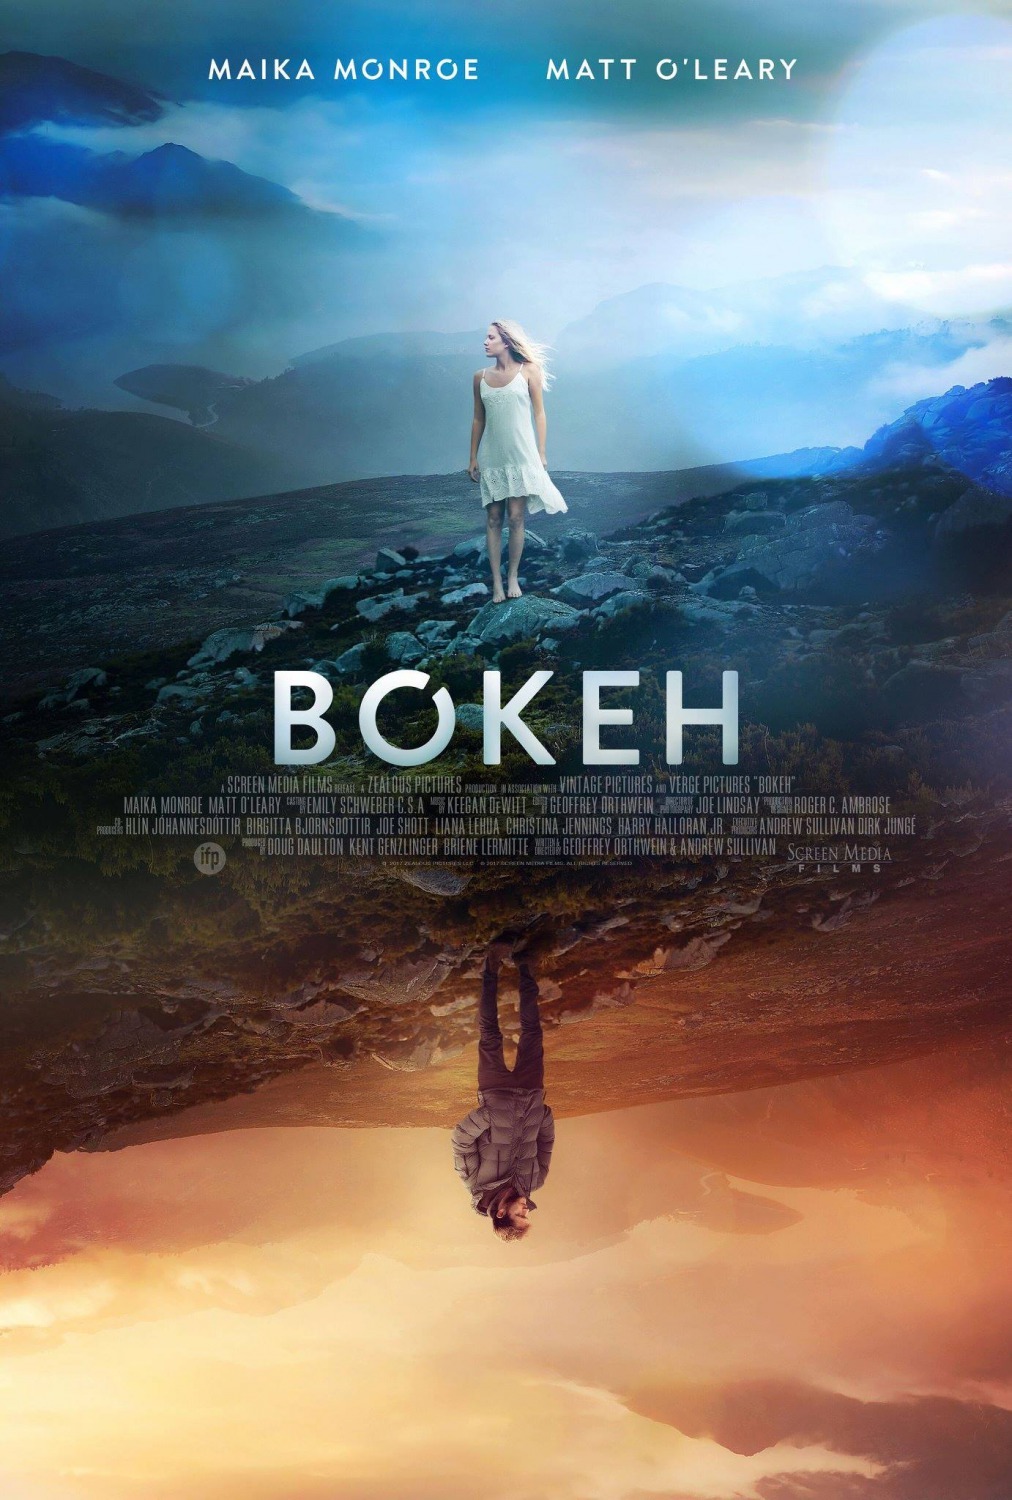 Bokeh (2017) ปริศนาโลกพร่าเลือน (Soundtrack ซับไทย) Maika Monroe